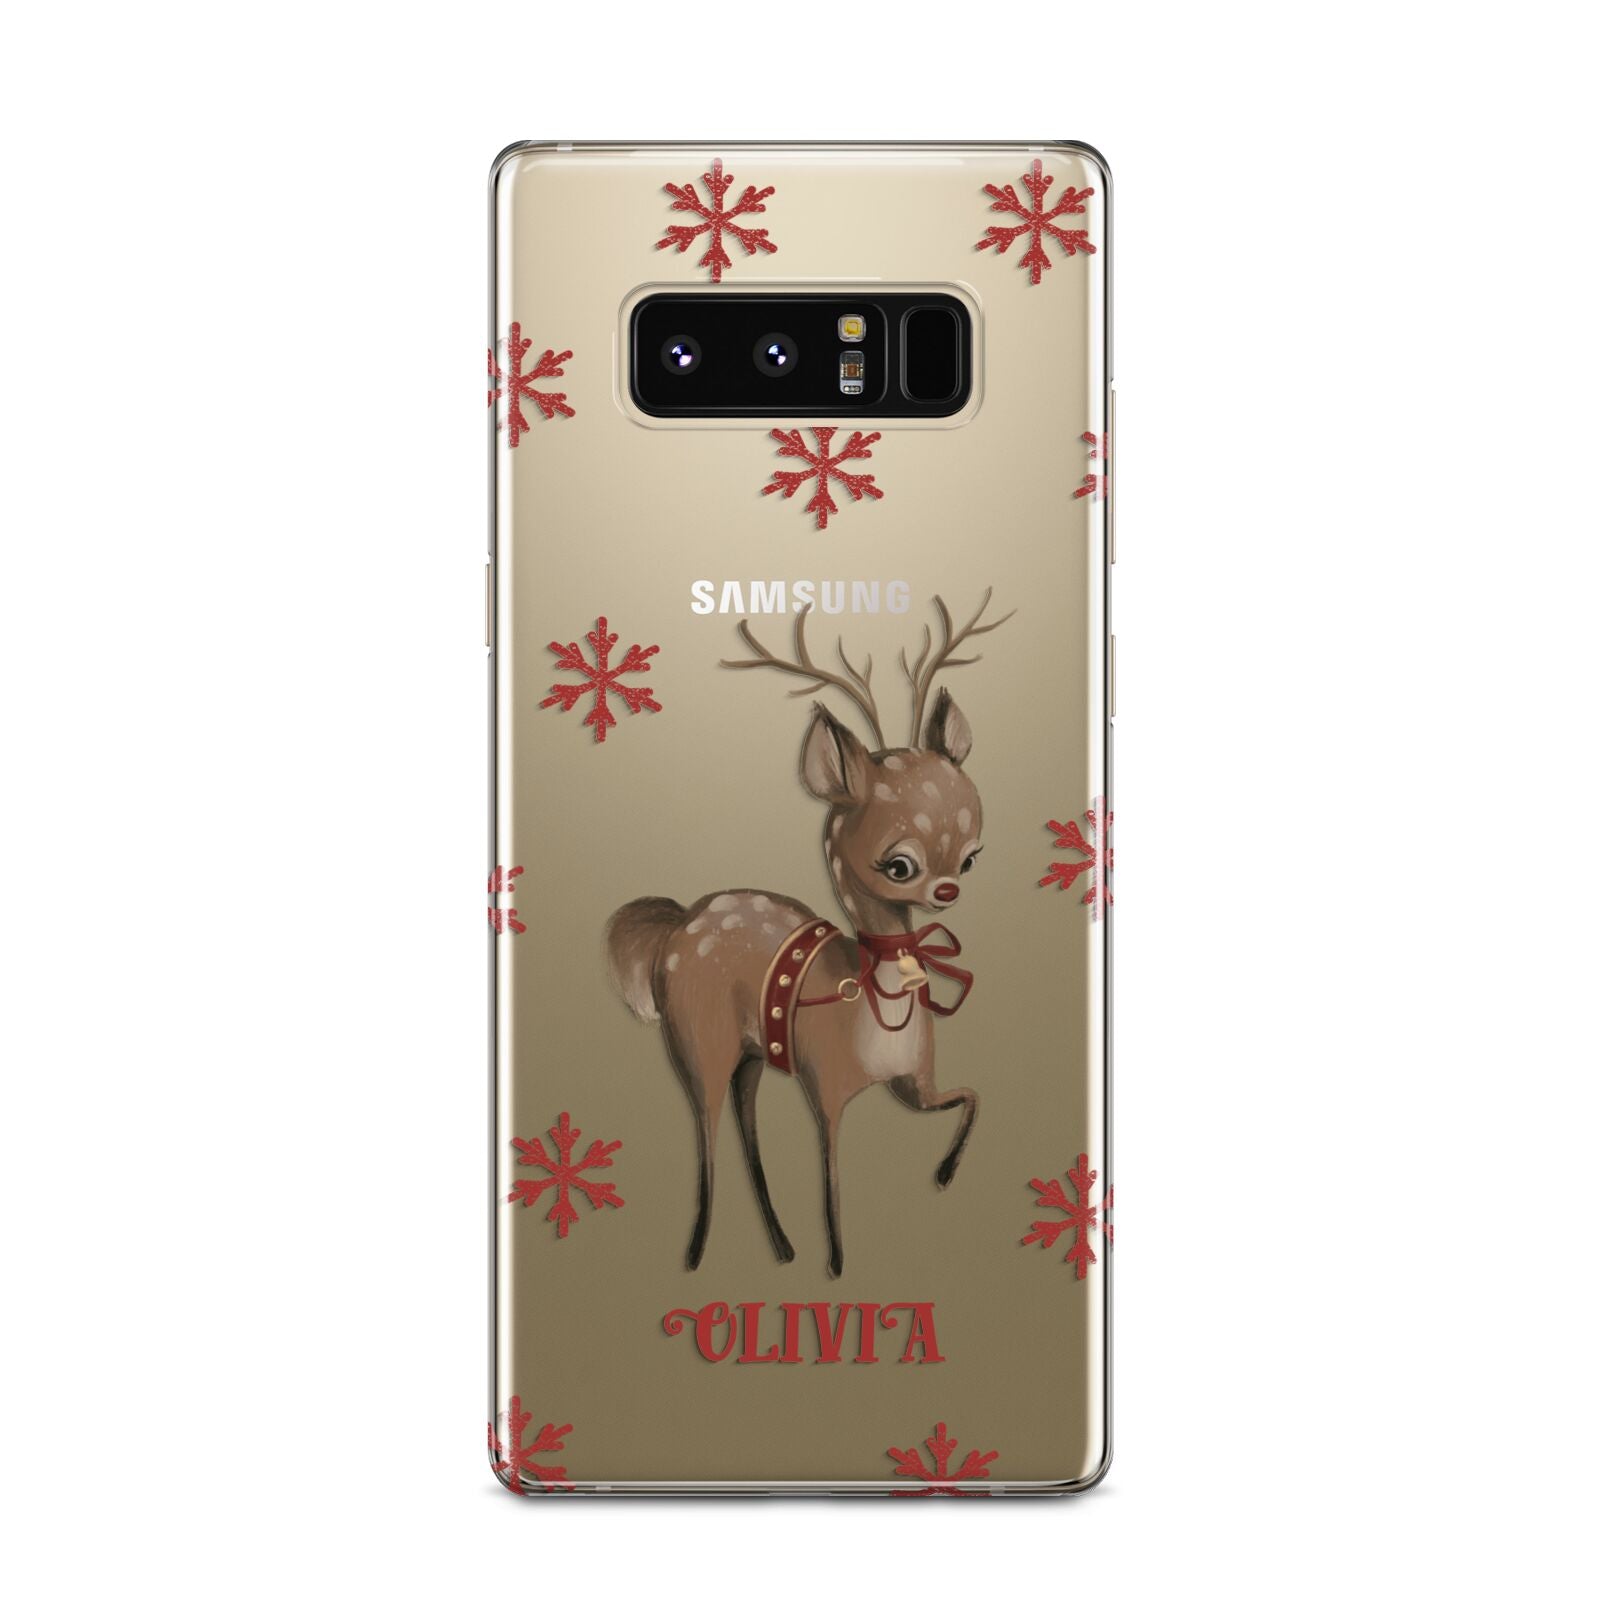 Rudolph Delivery Samsung Galaxy Note 8 Case